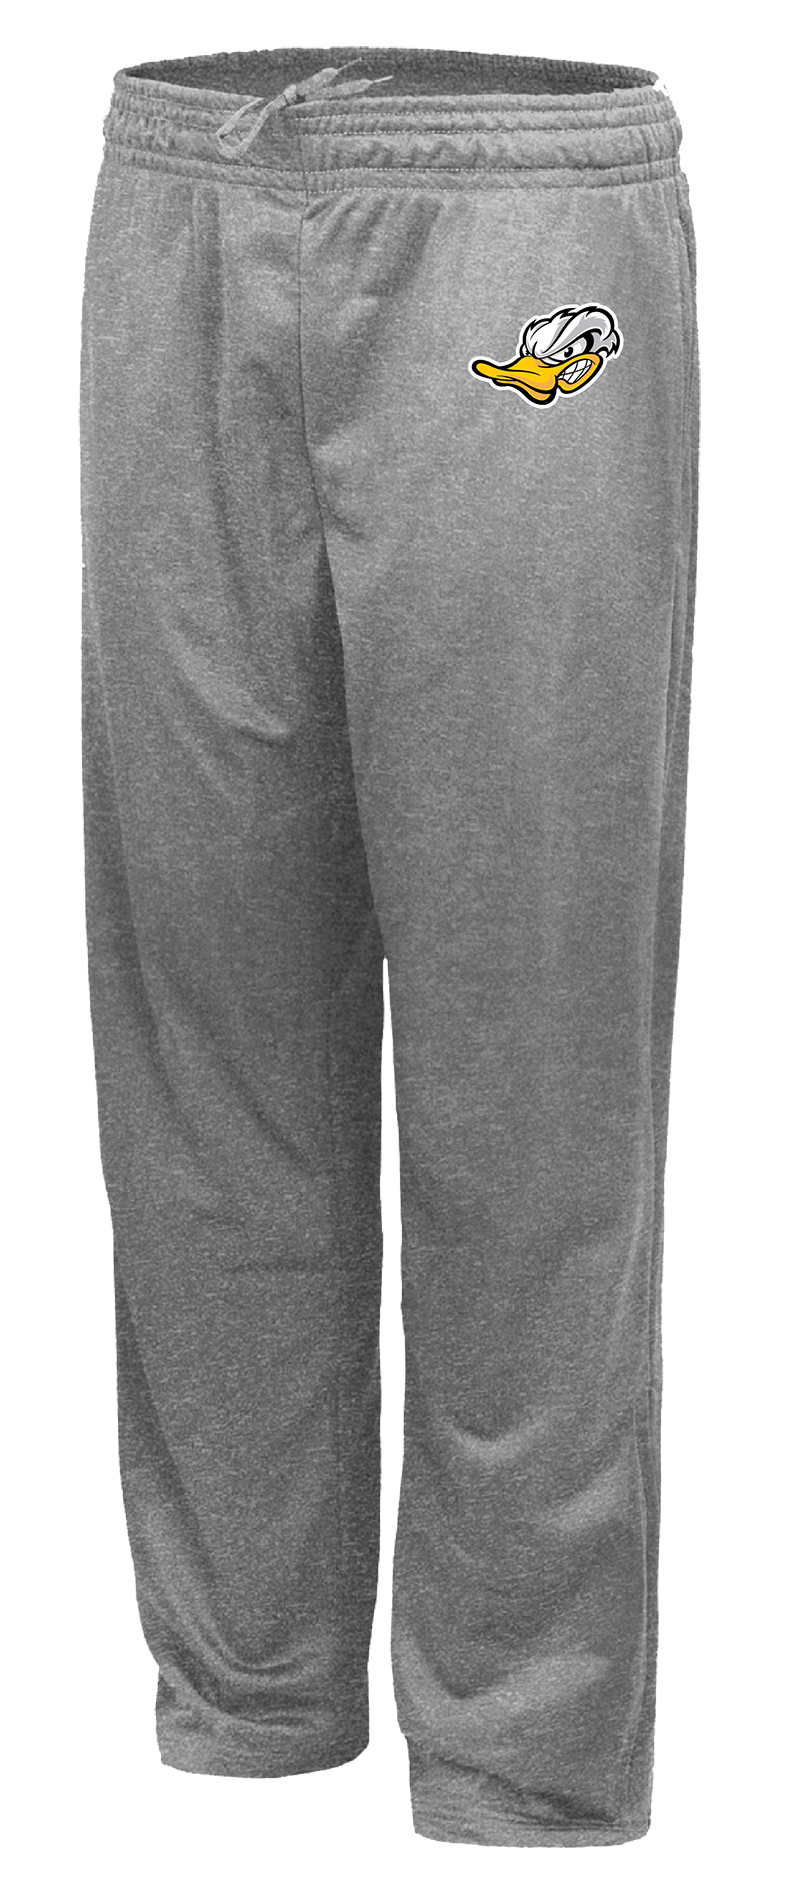 Diamond State Ducks - Embroidered Sweatpants (Gray)